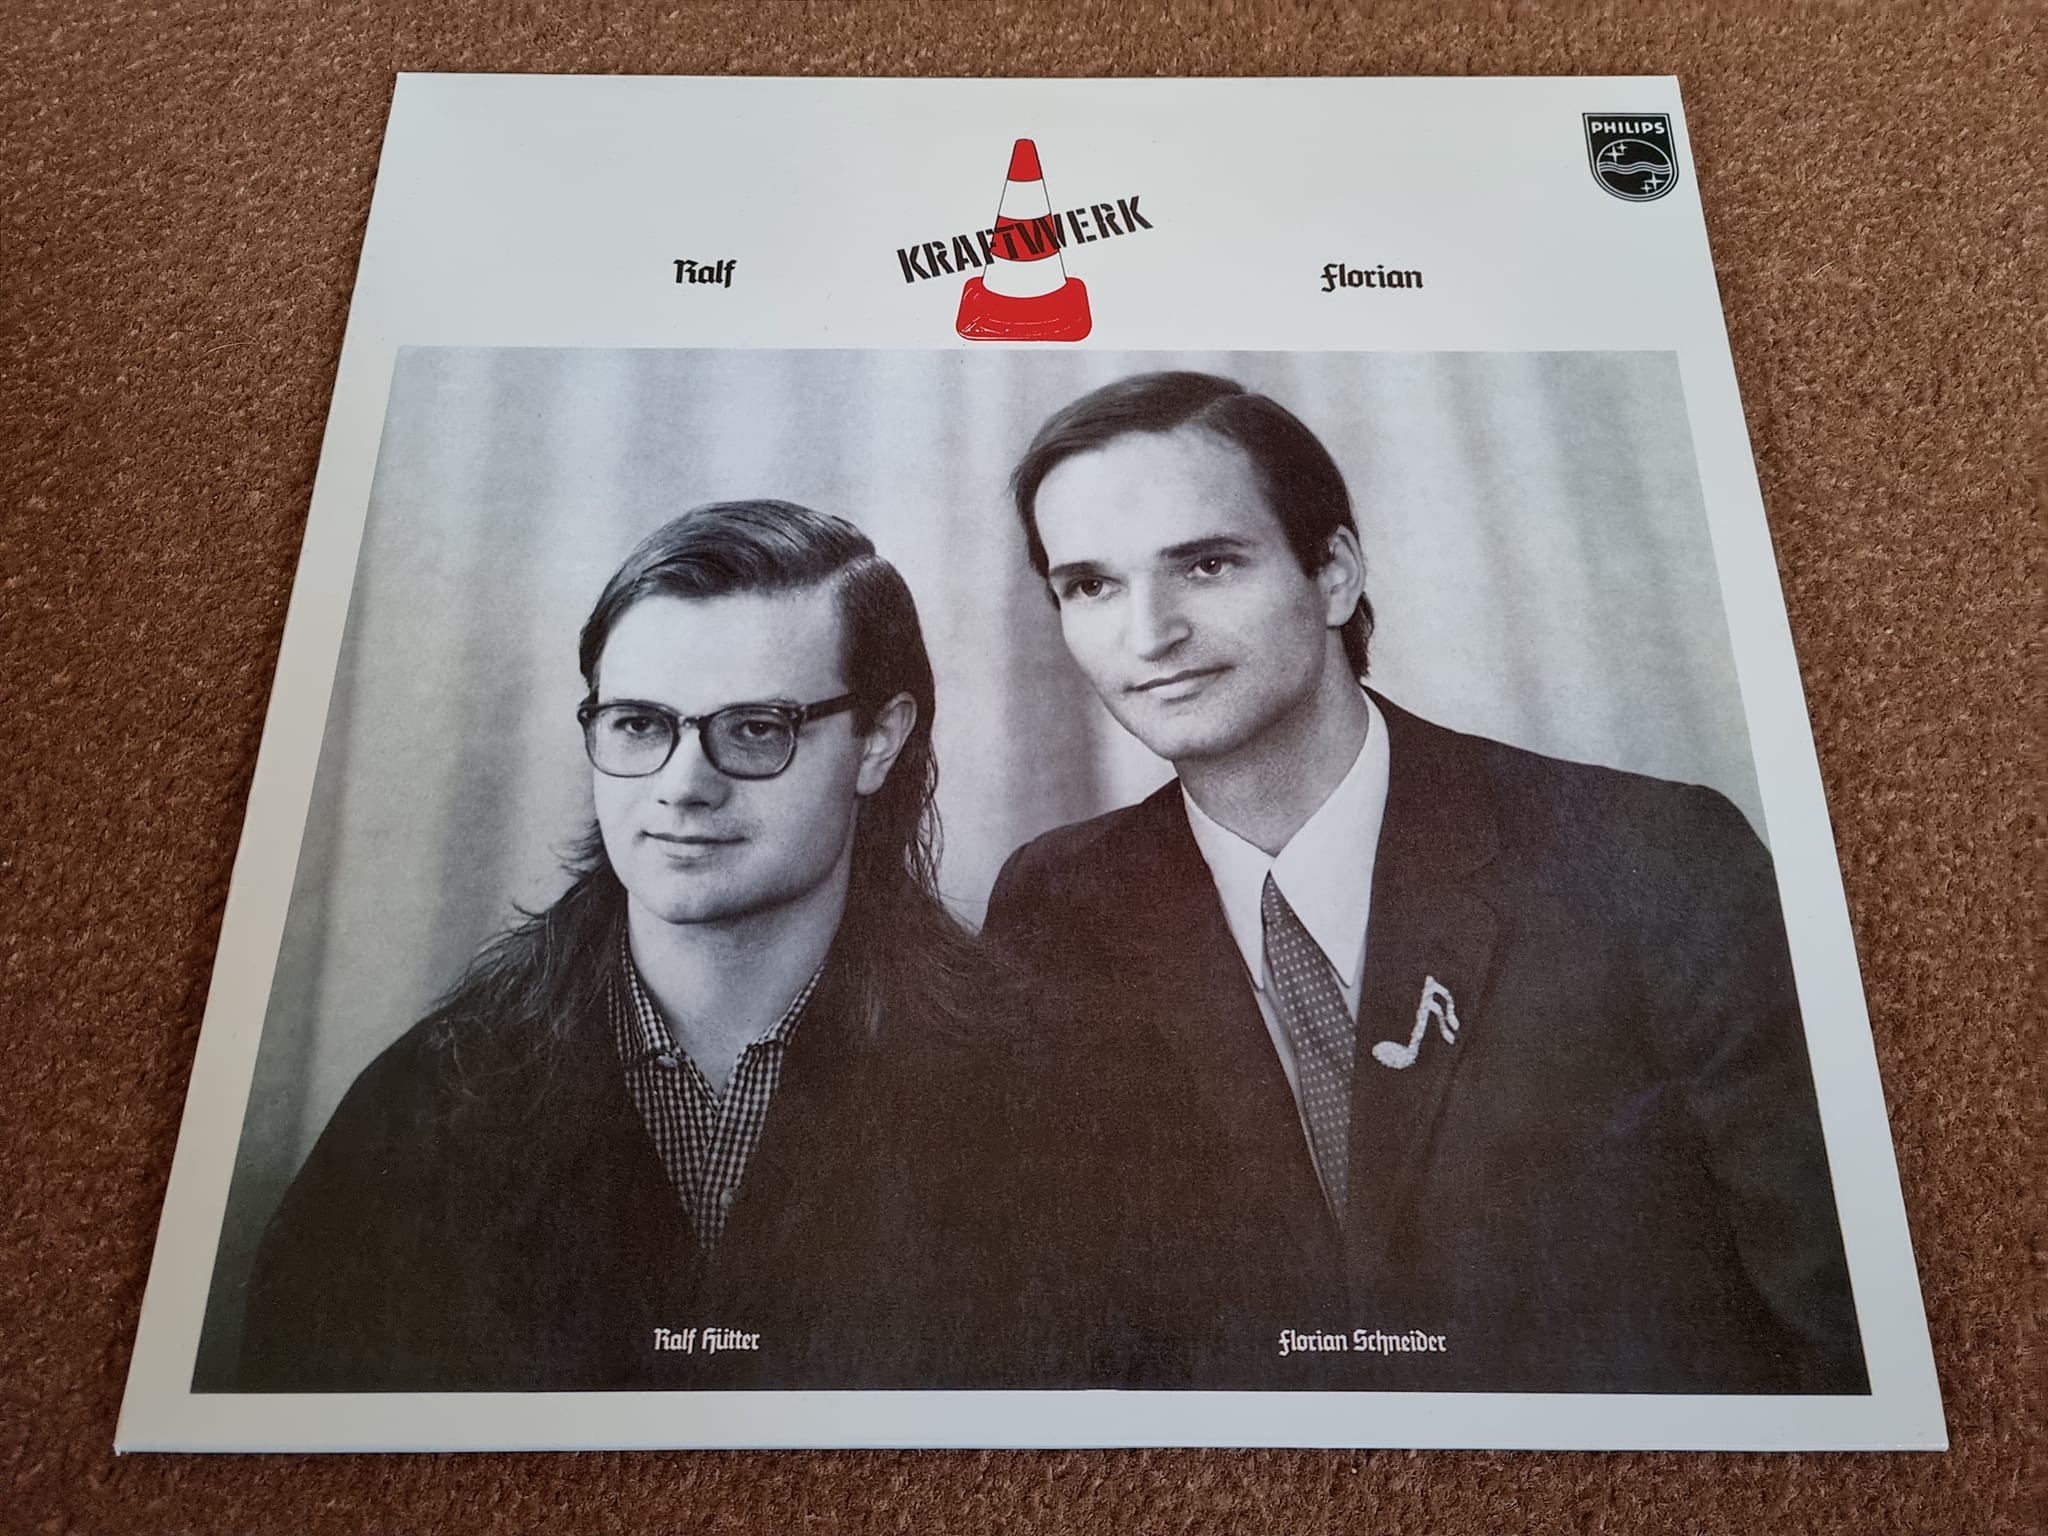 Ralf & Florian - Kraftwerk LP Record Vinyl